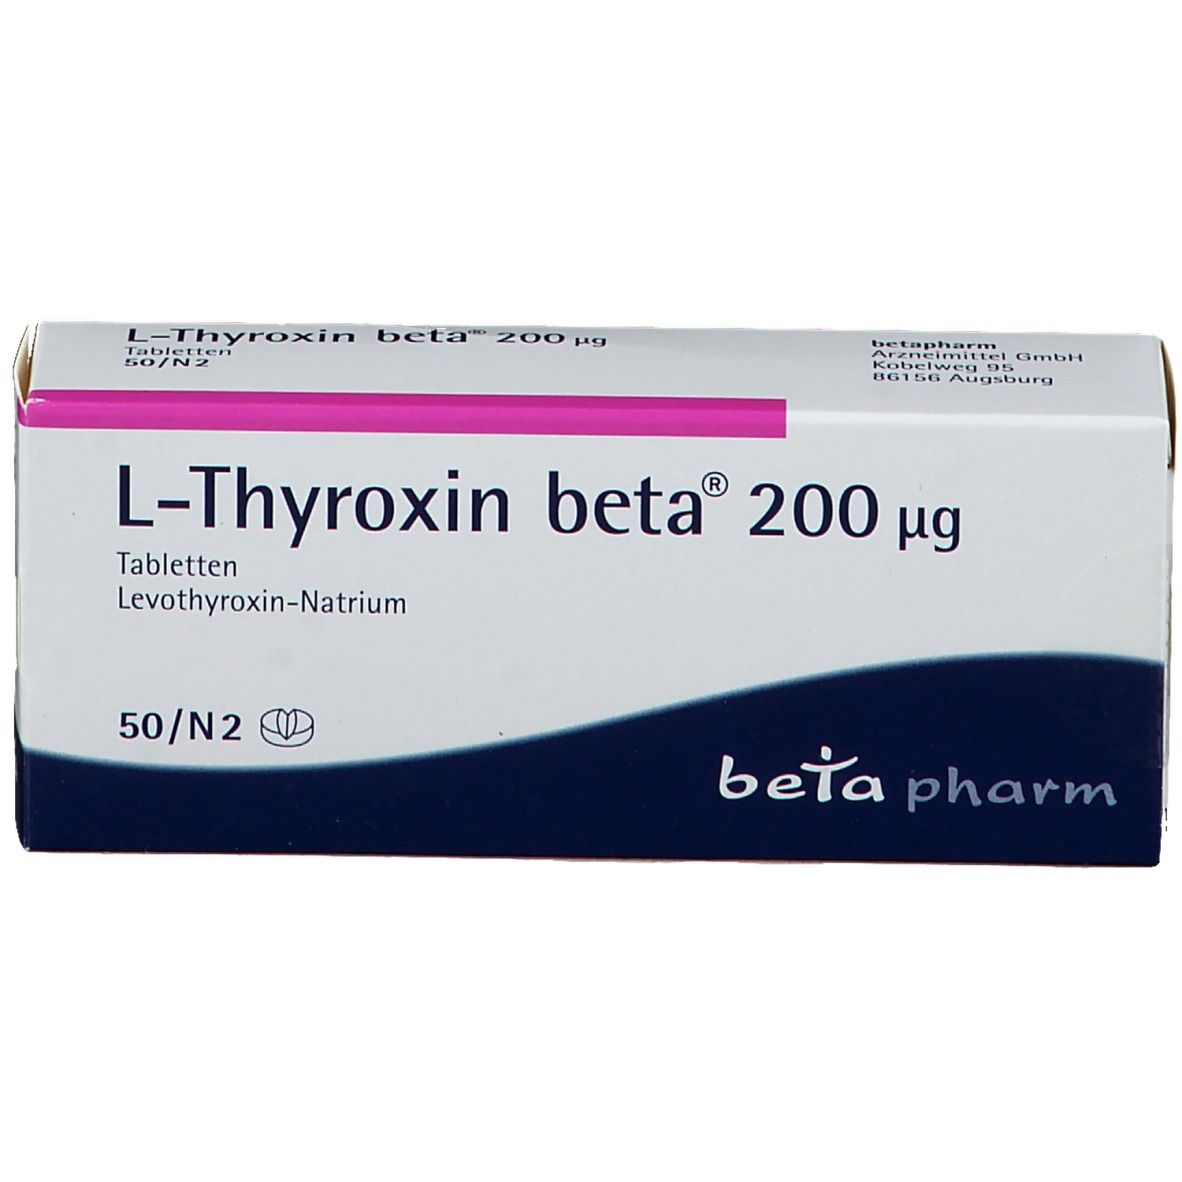 L-Thyroxin beta® 200 ug